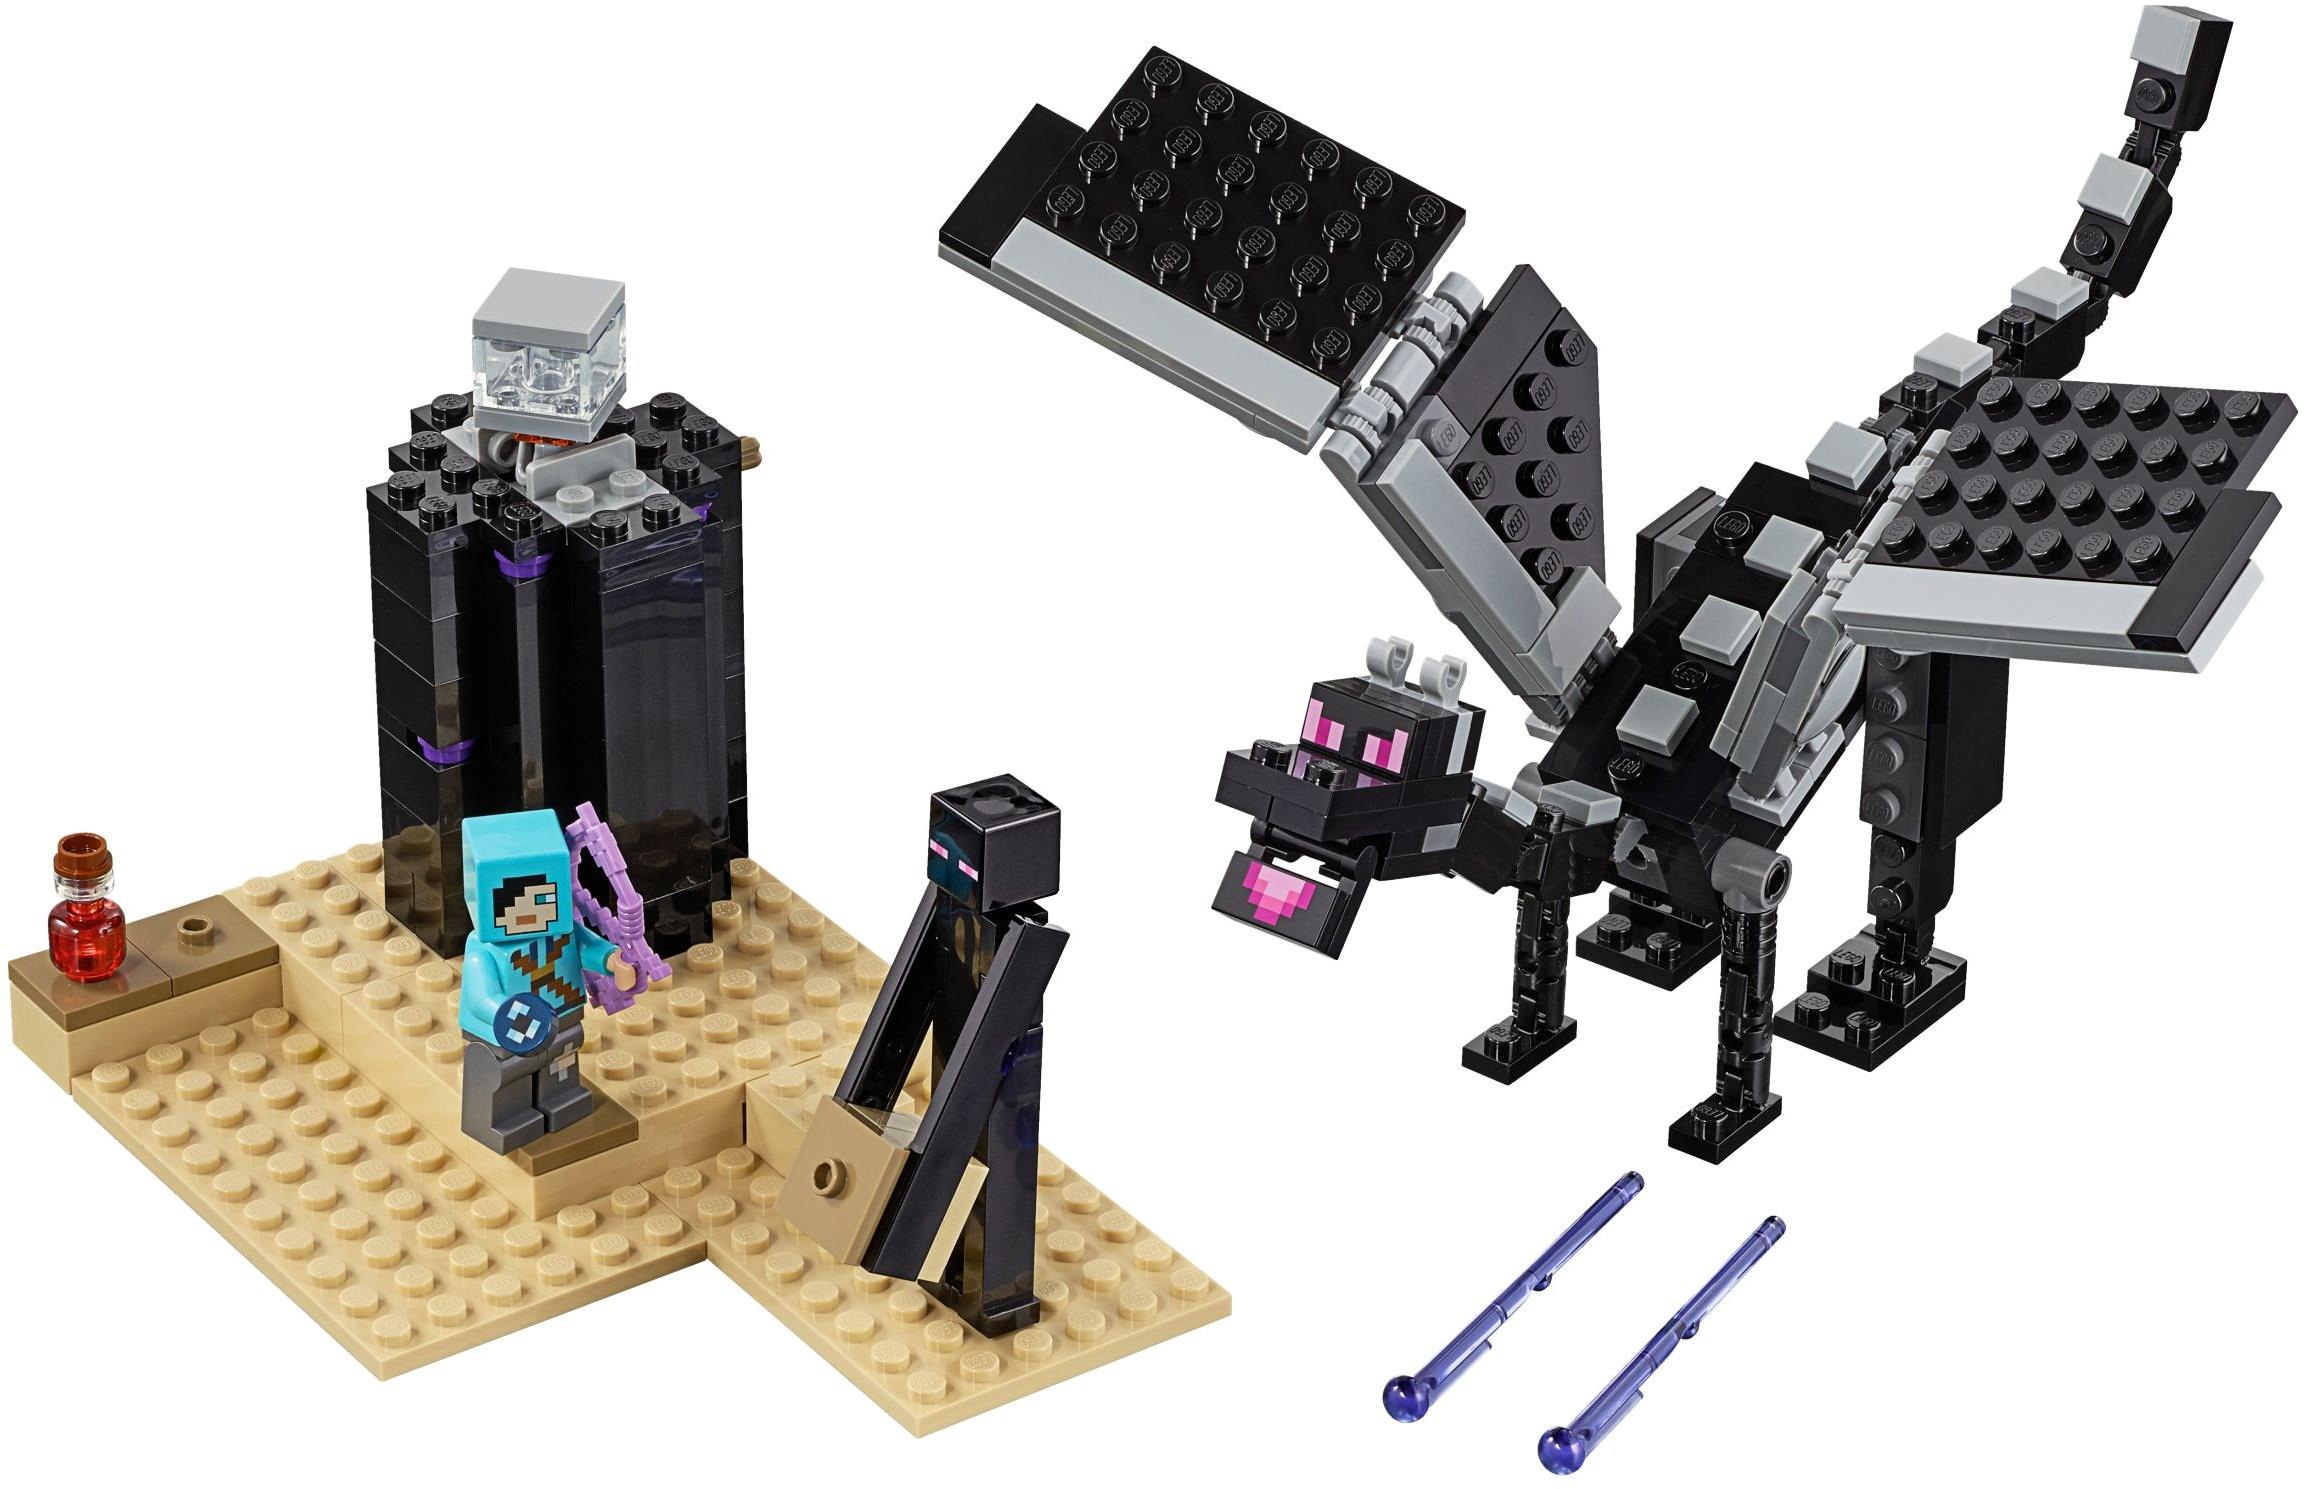 LEGO Minecraft Nether Set Lot! (21143) (21154) (21145)